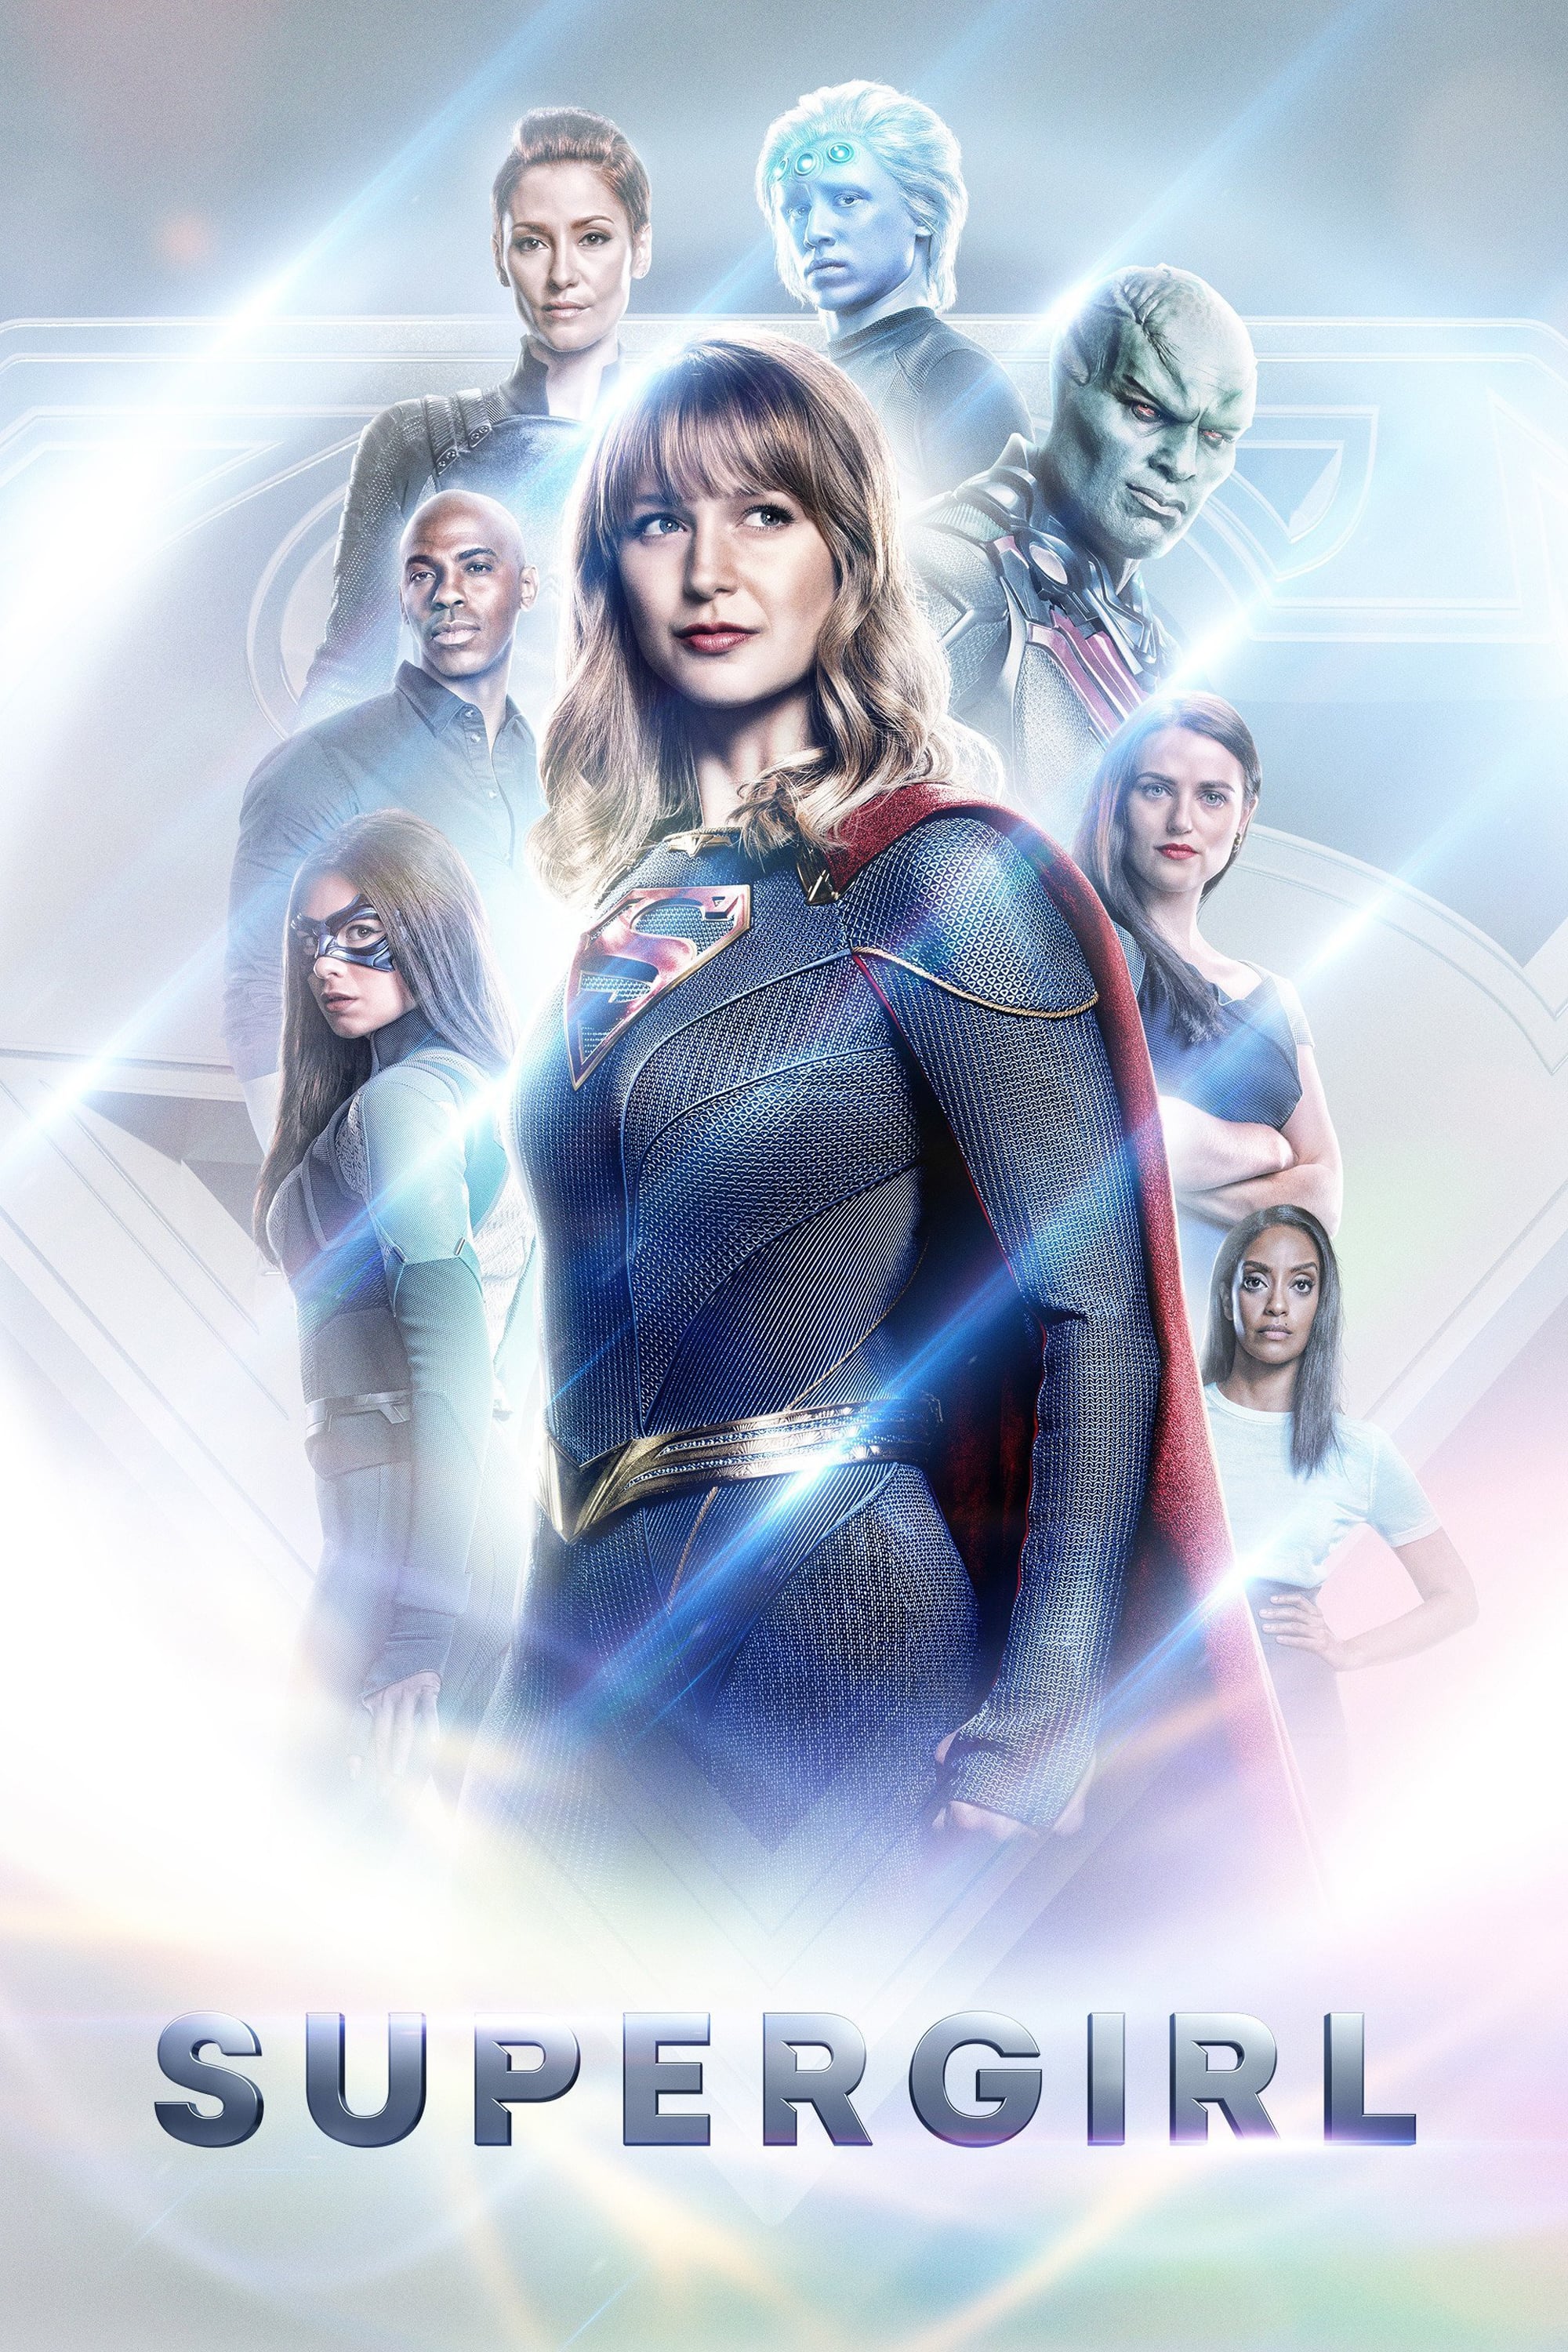 Supergirl - Saison 5